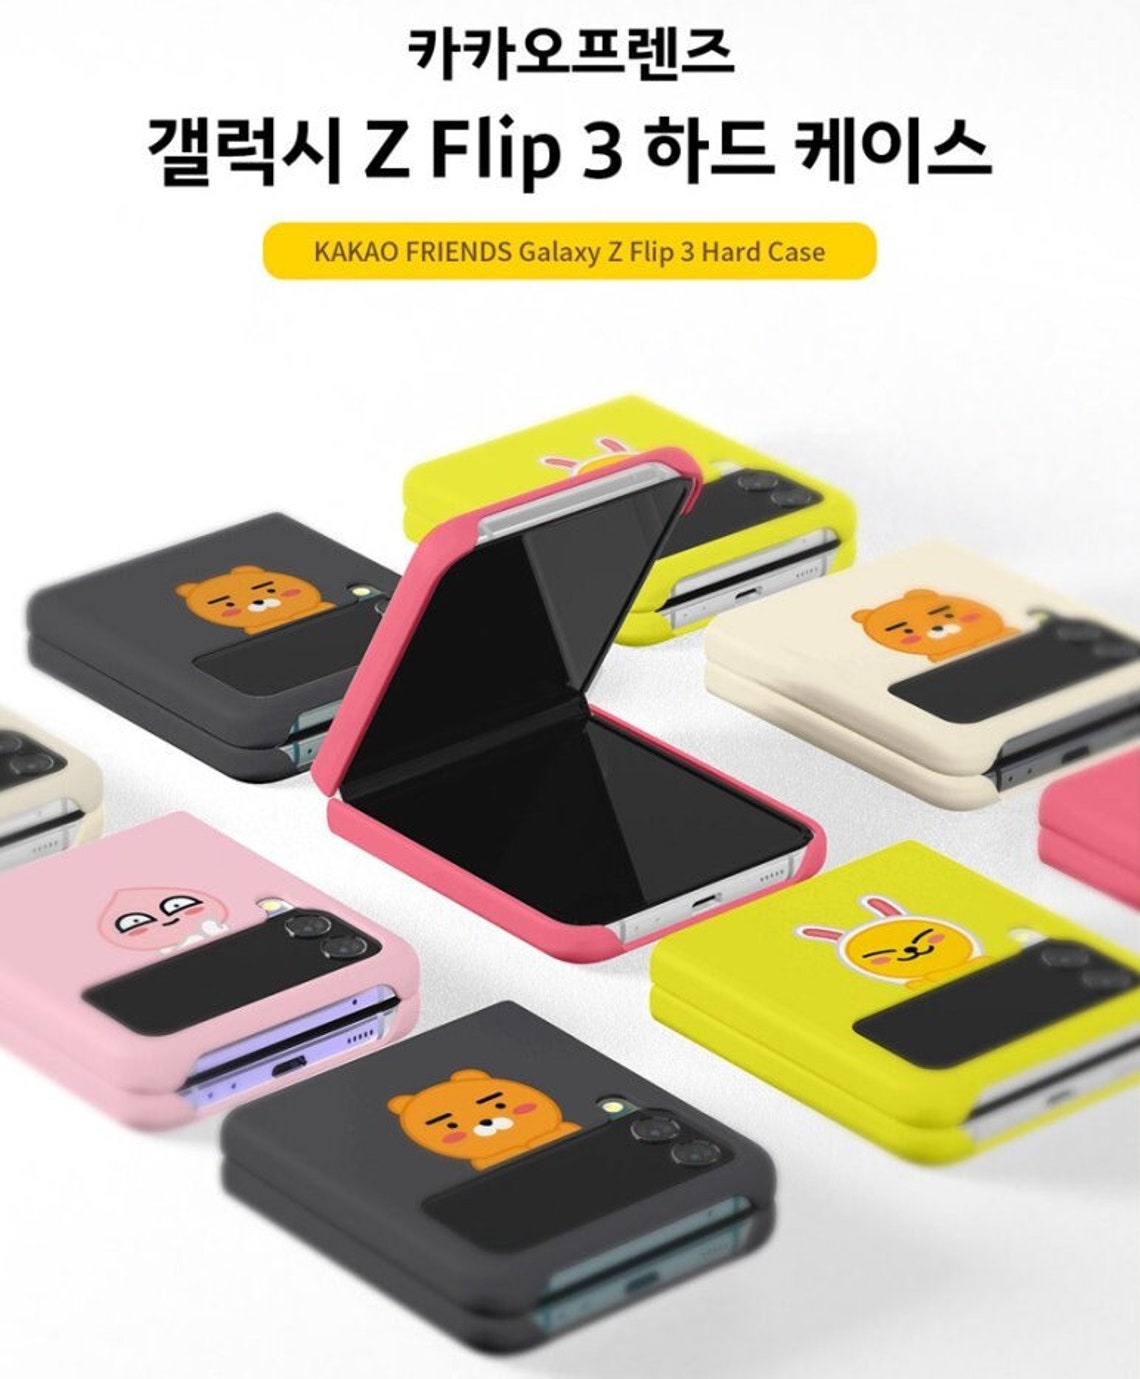 Korean Kakao Friends Official Samsung Phone Case for Samsung